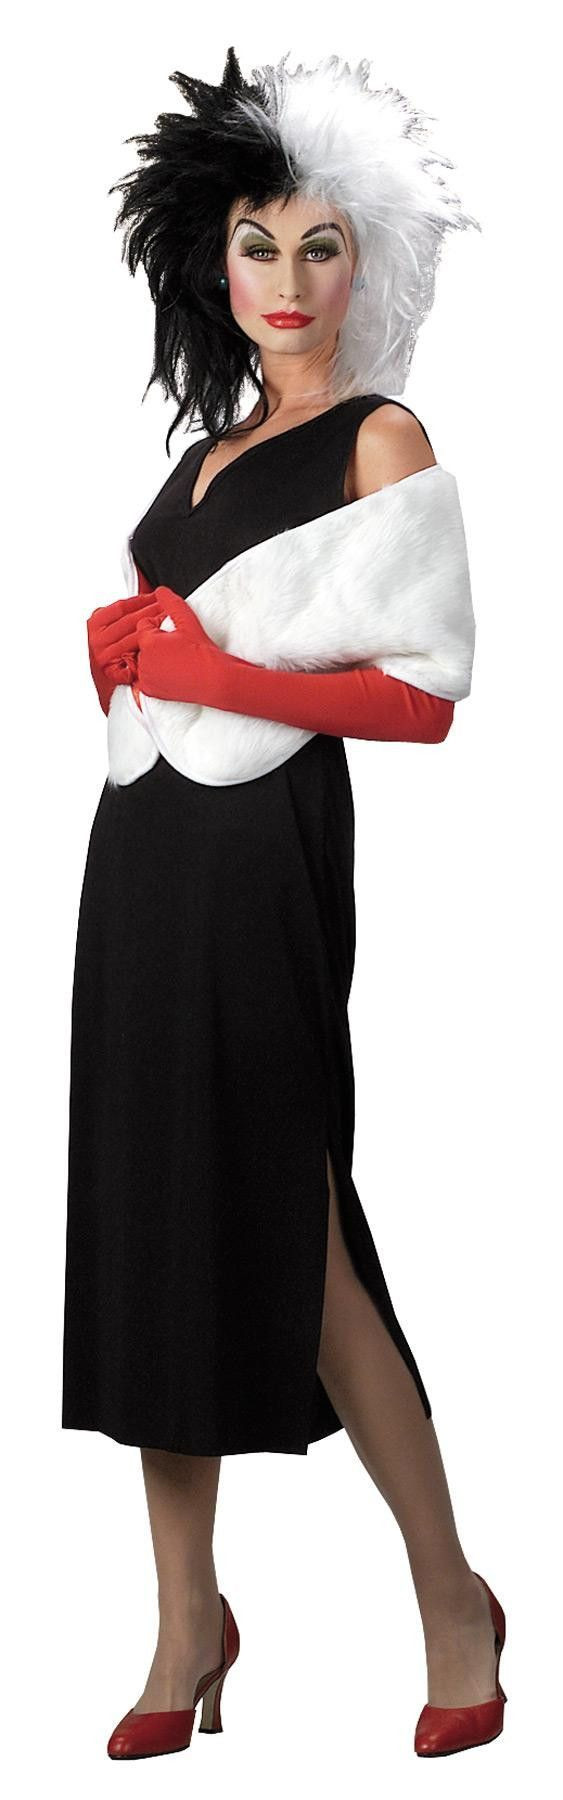 Best ideas about DIY Cruella De Vil Costume
. Save or Pin Cruella De Vil Adult Cruella DeVille Now.